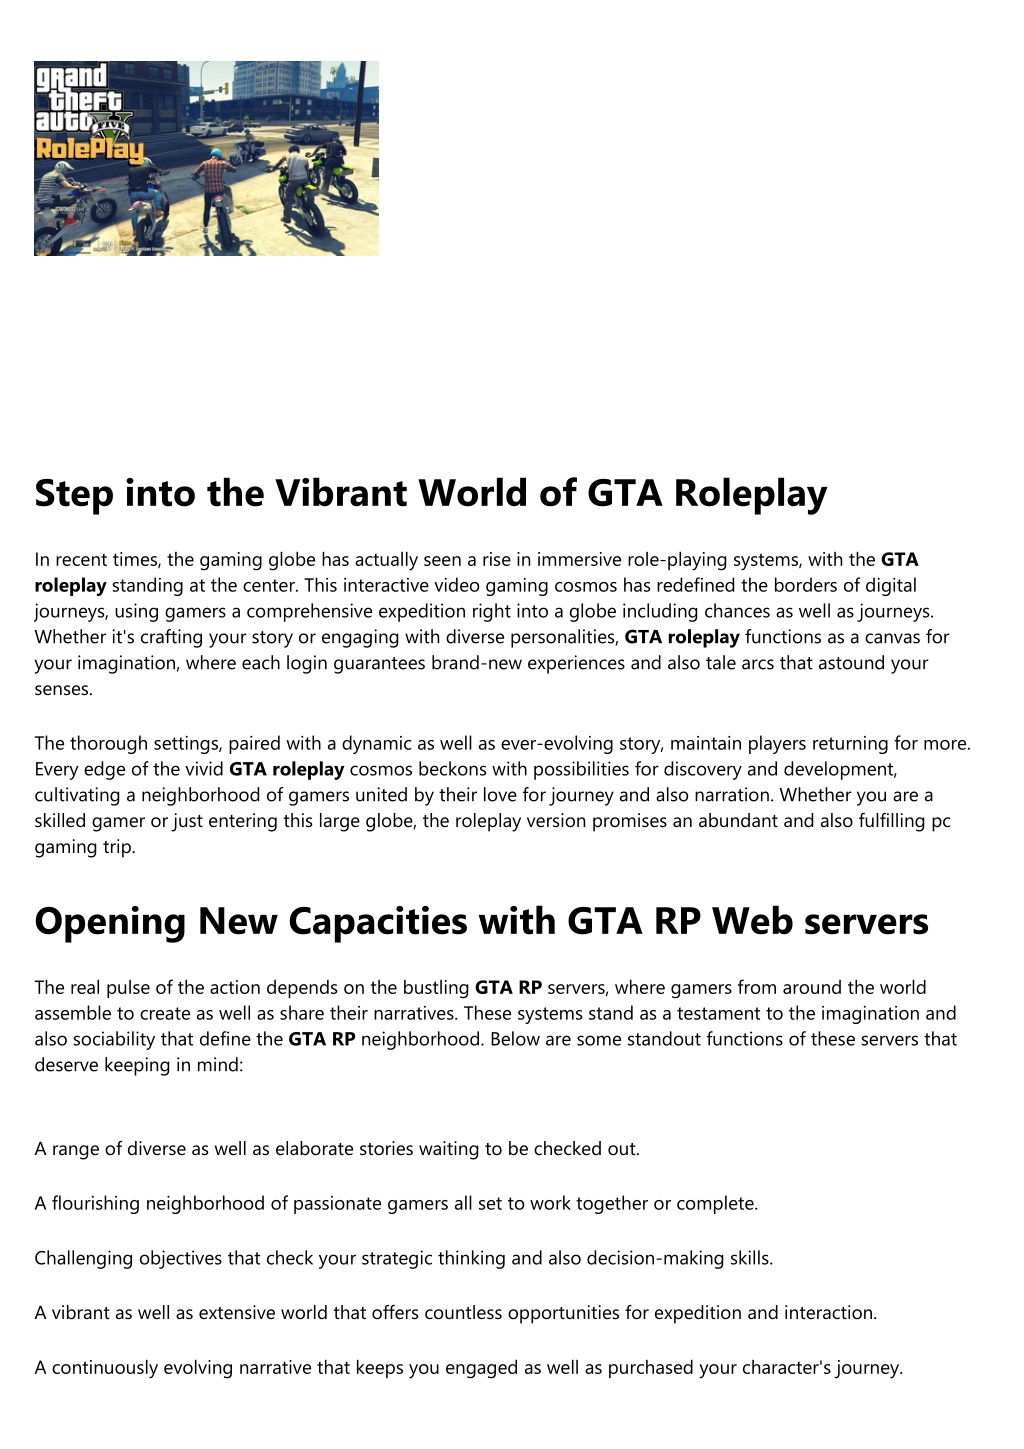 GTA 5 Roleplay Servers Explained